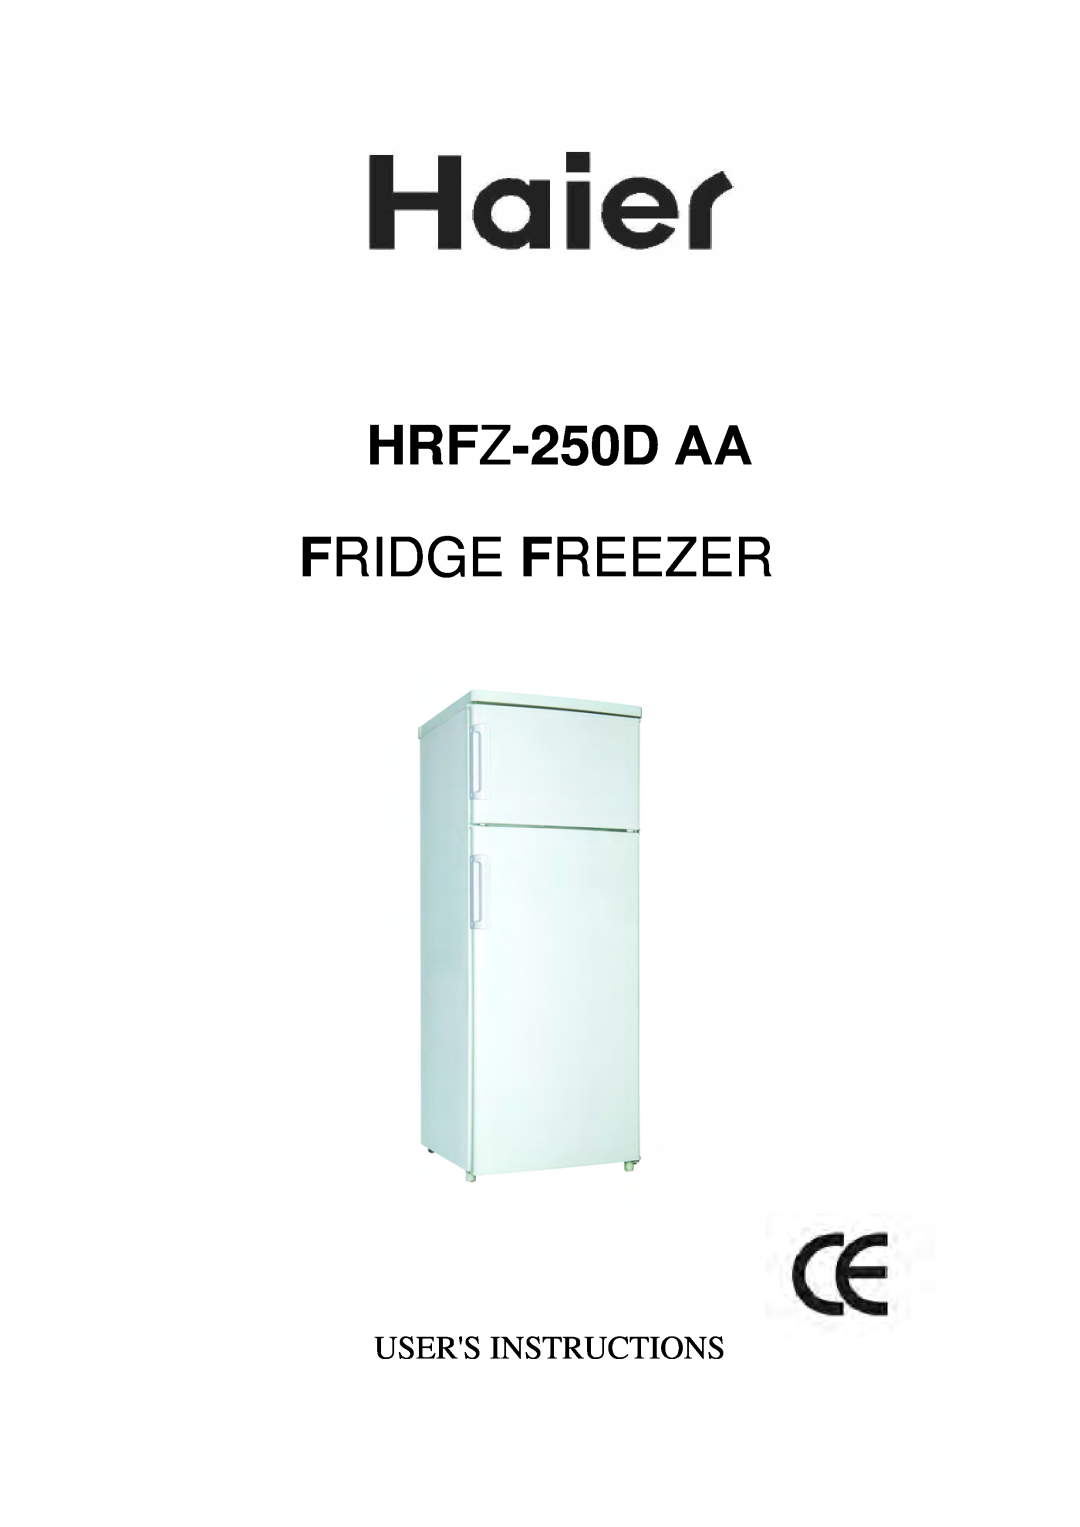 Haier HRFZ-250D AA manual HRFZ-250DAA FRIDGE FREEZER, Users Instructions 